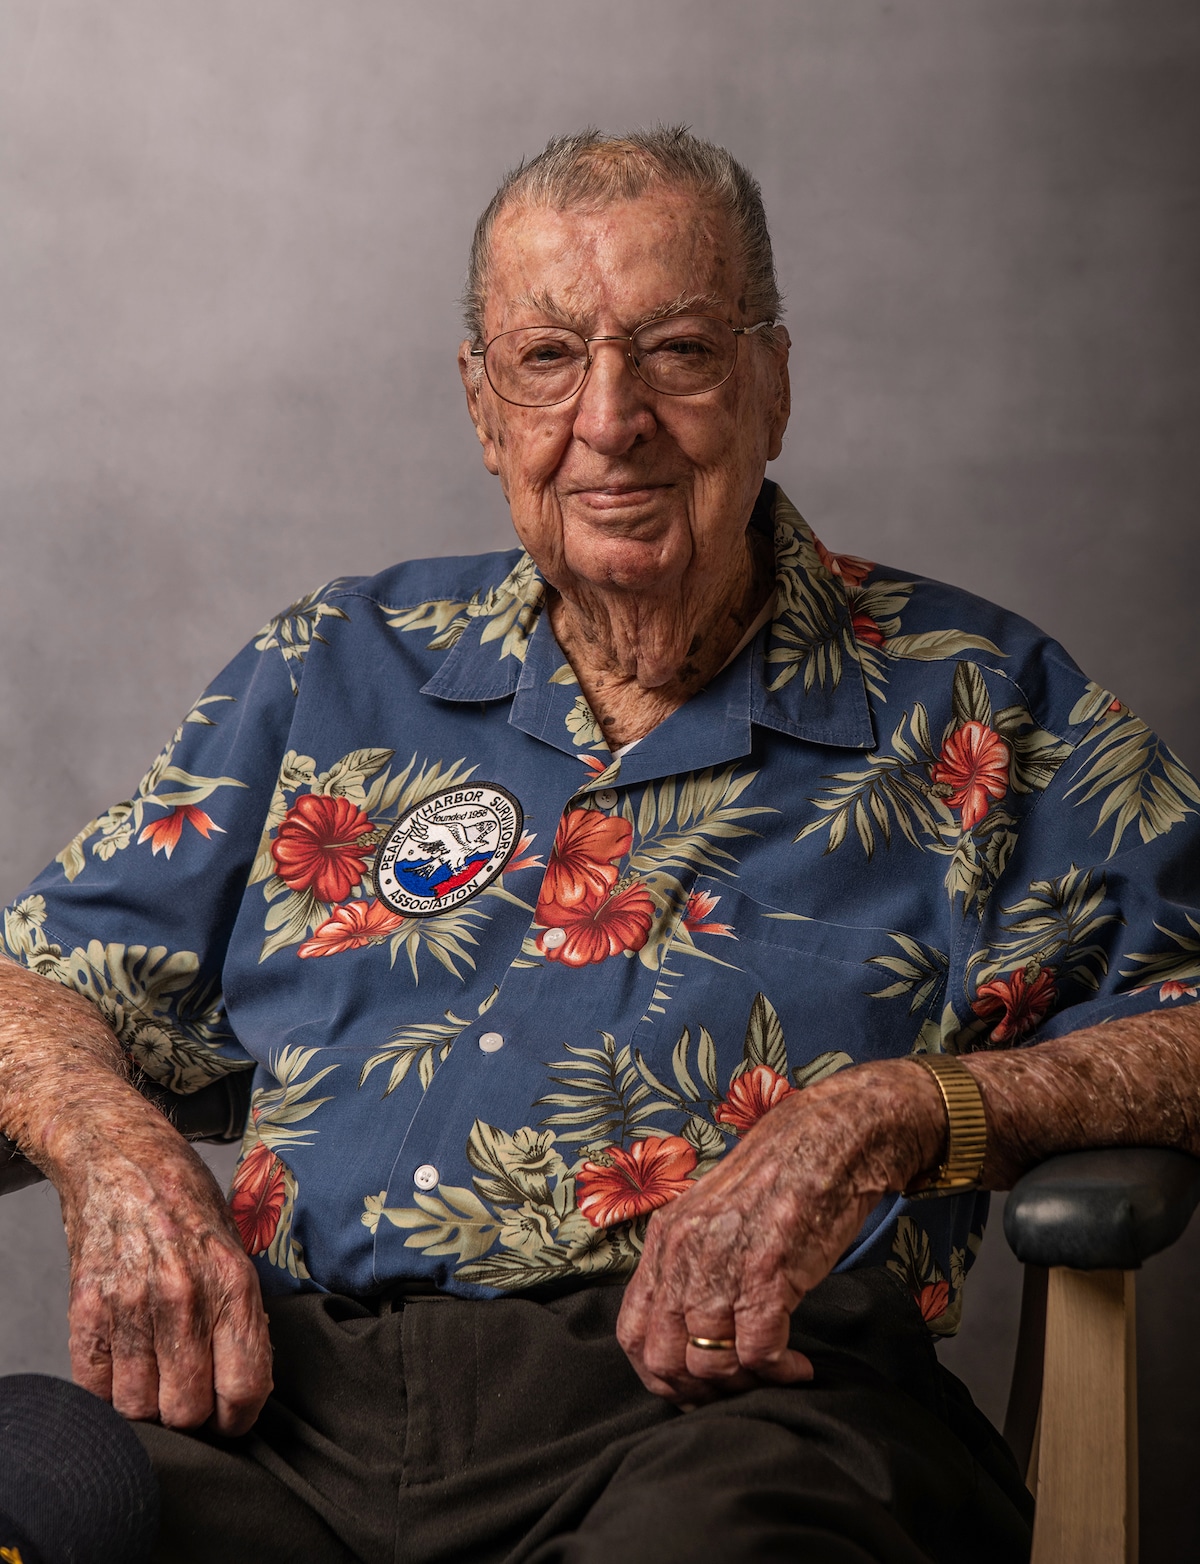 Portraits of Honor - World War II Veterans by Jeffrey Rease